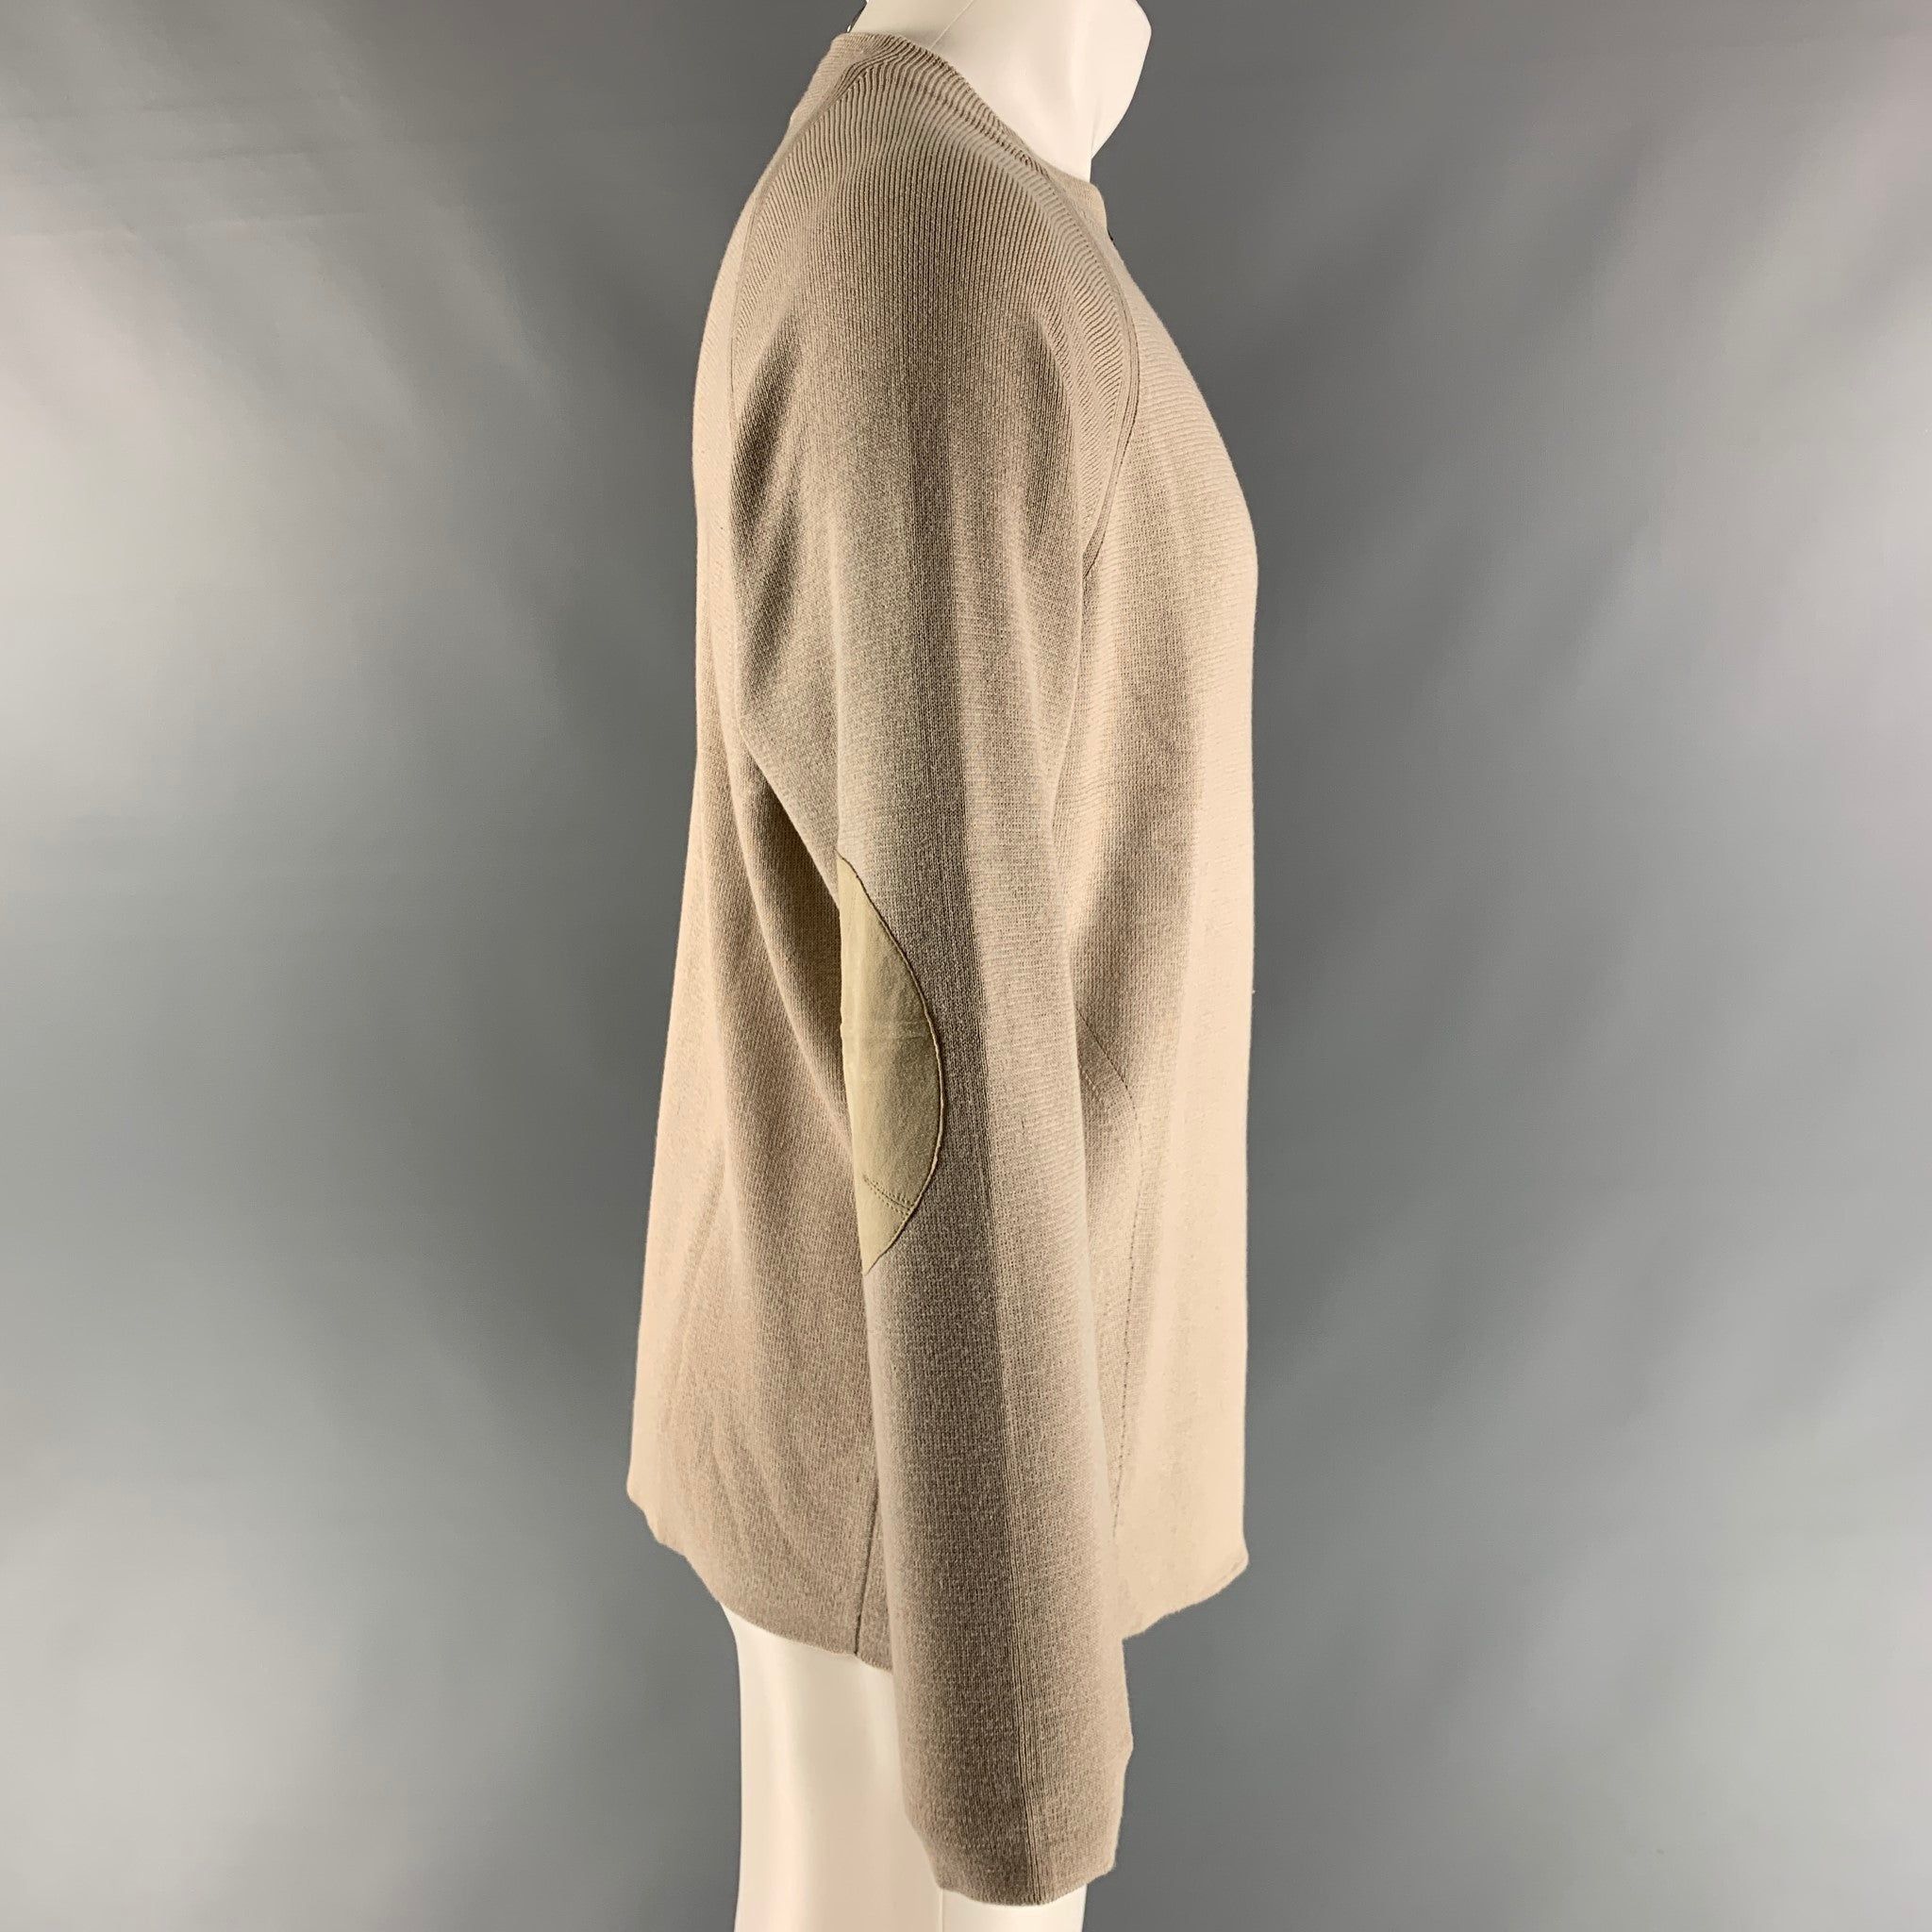 Salvatore Ferragamo Oatmeal Knitted Cotton & Cashmere Jacket Size US M / EU 48-50 / 2 - 2 Preview